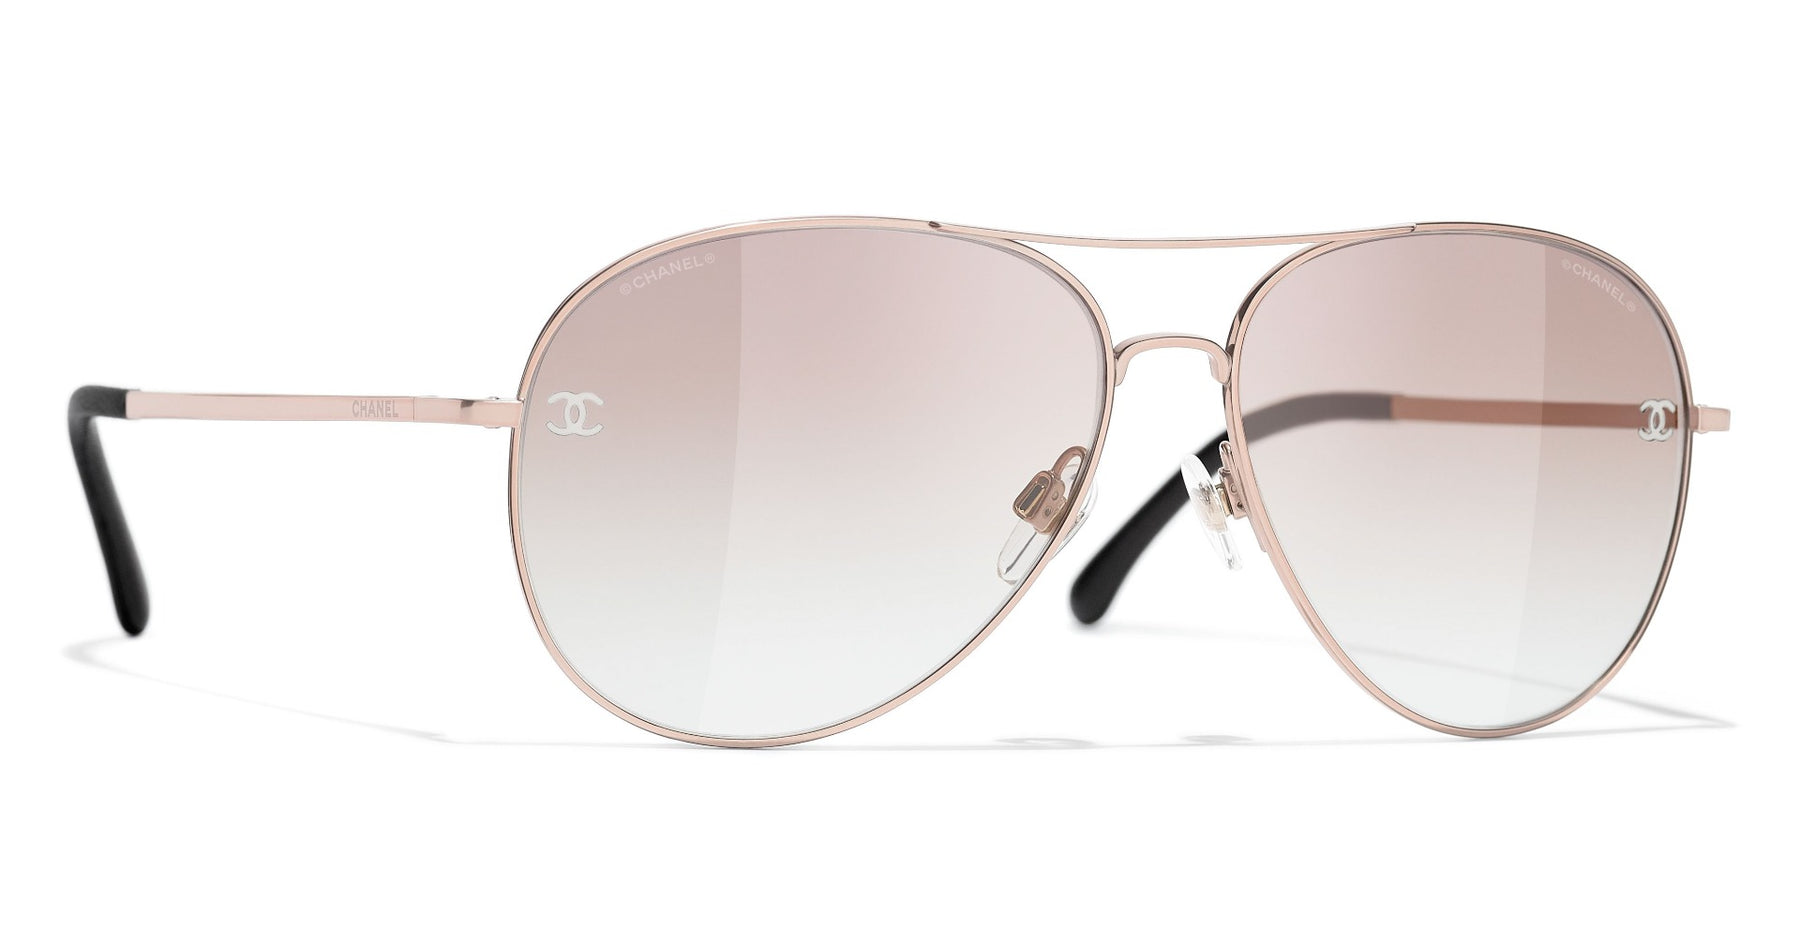 Chanel Aviator Sunglasses for sale